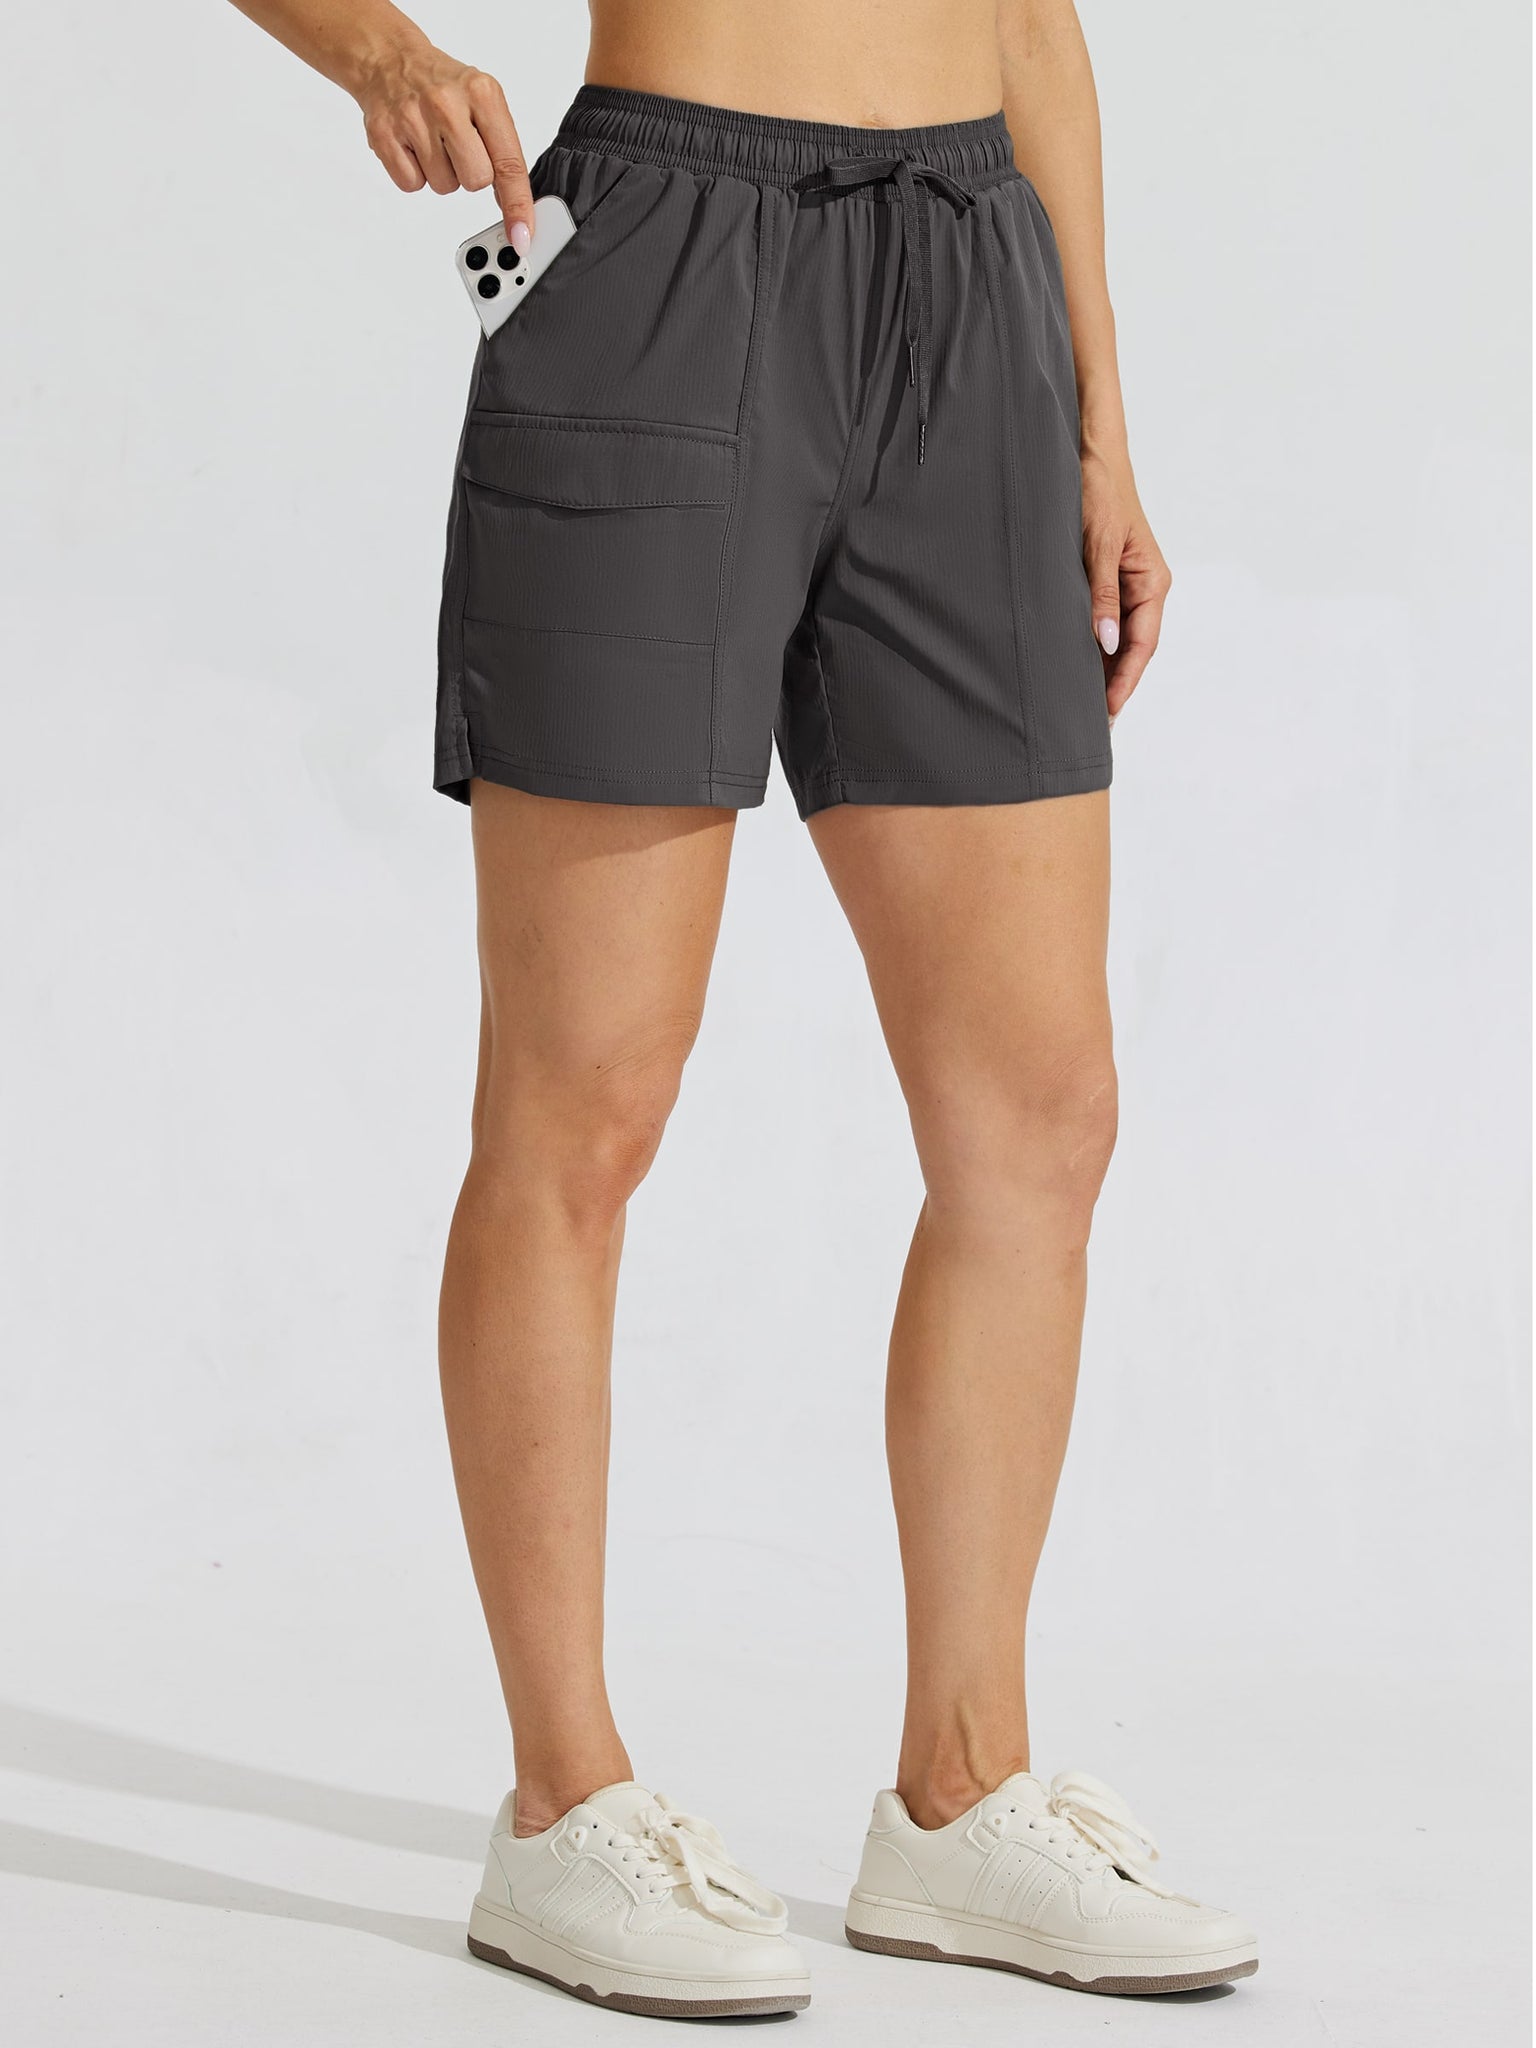 Women's Golf Athletic Shorts